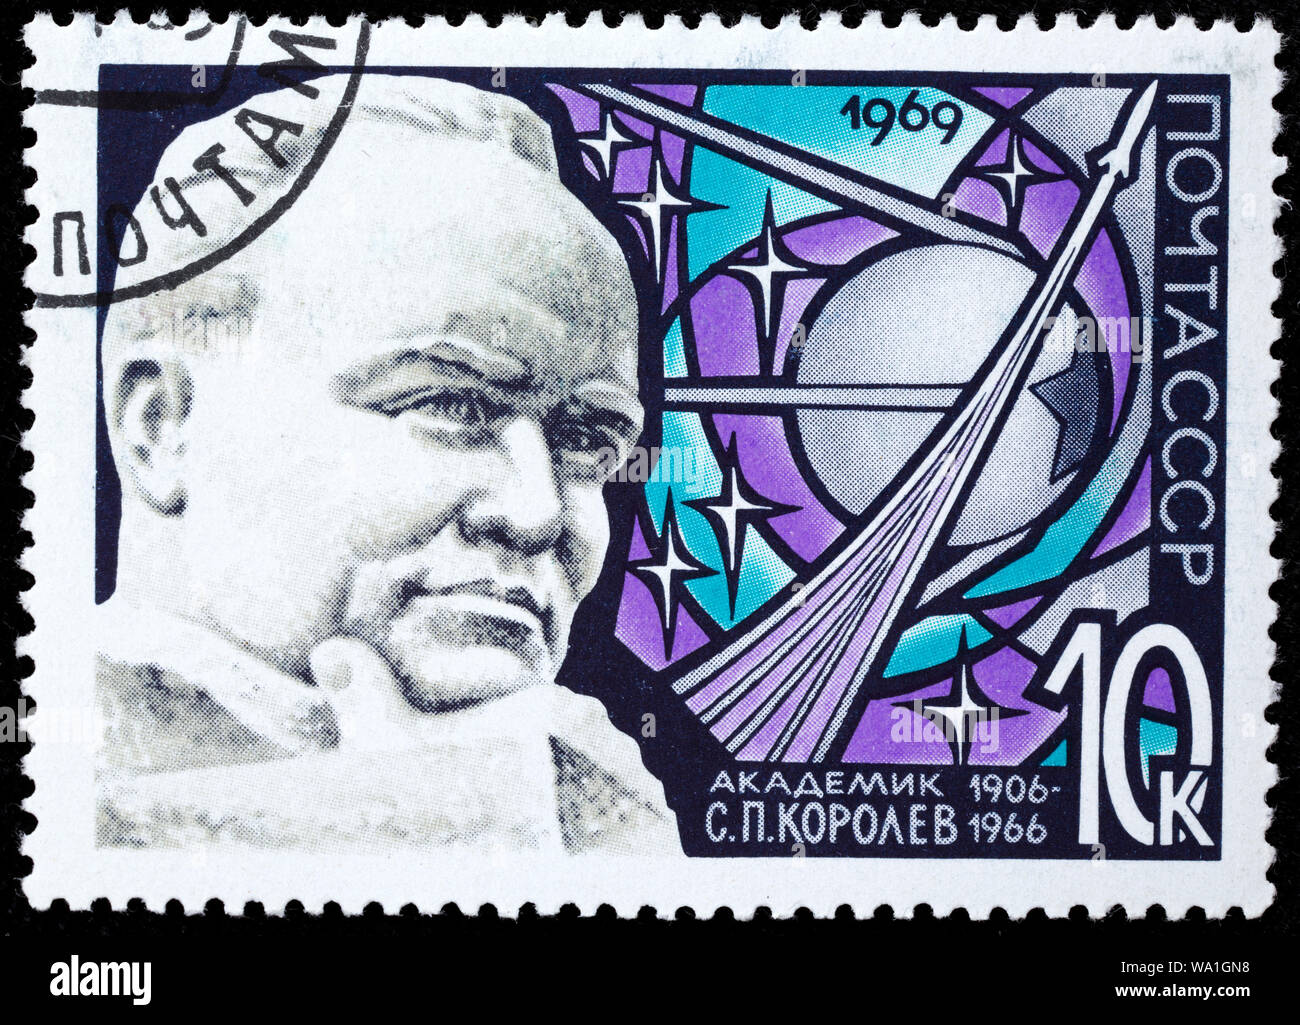 Sergei Korolev (1907-1966), Soviet rocket engineer, spacecraft designer, Cosmonautics Day, postage stamp, Russia, USSR, 1969 Stock Photo